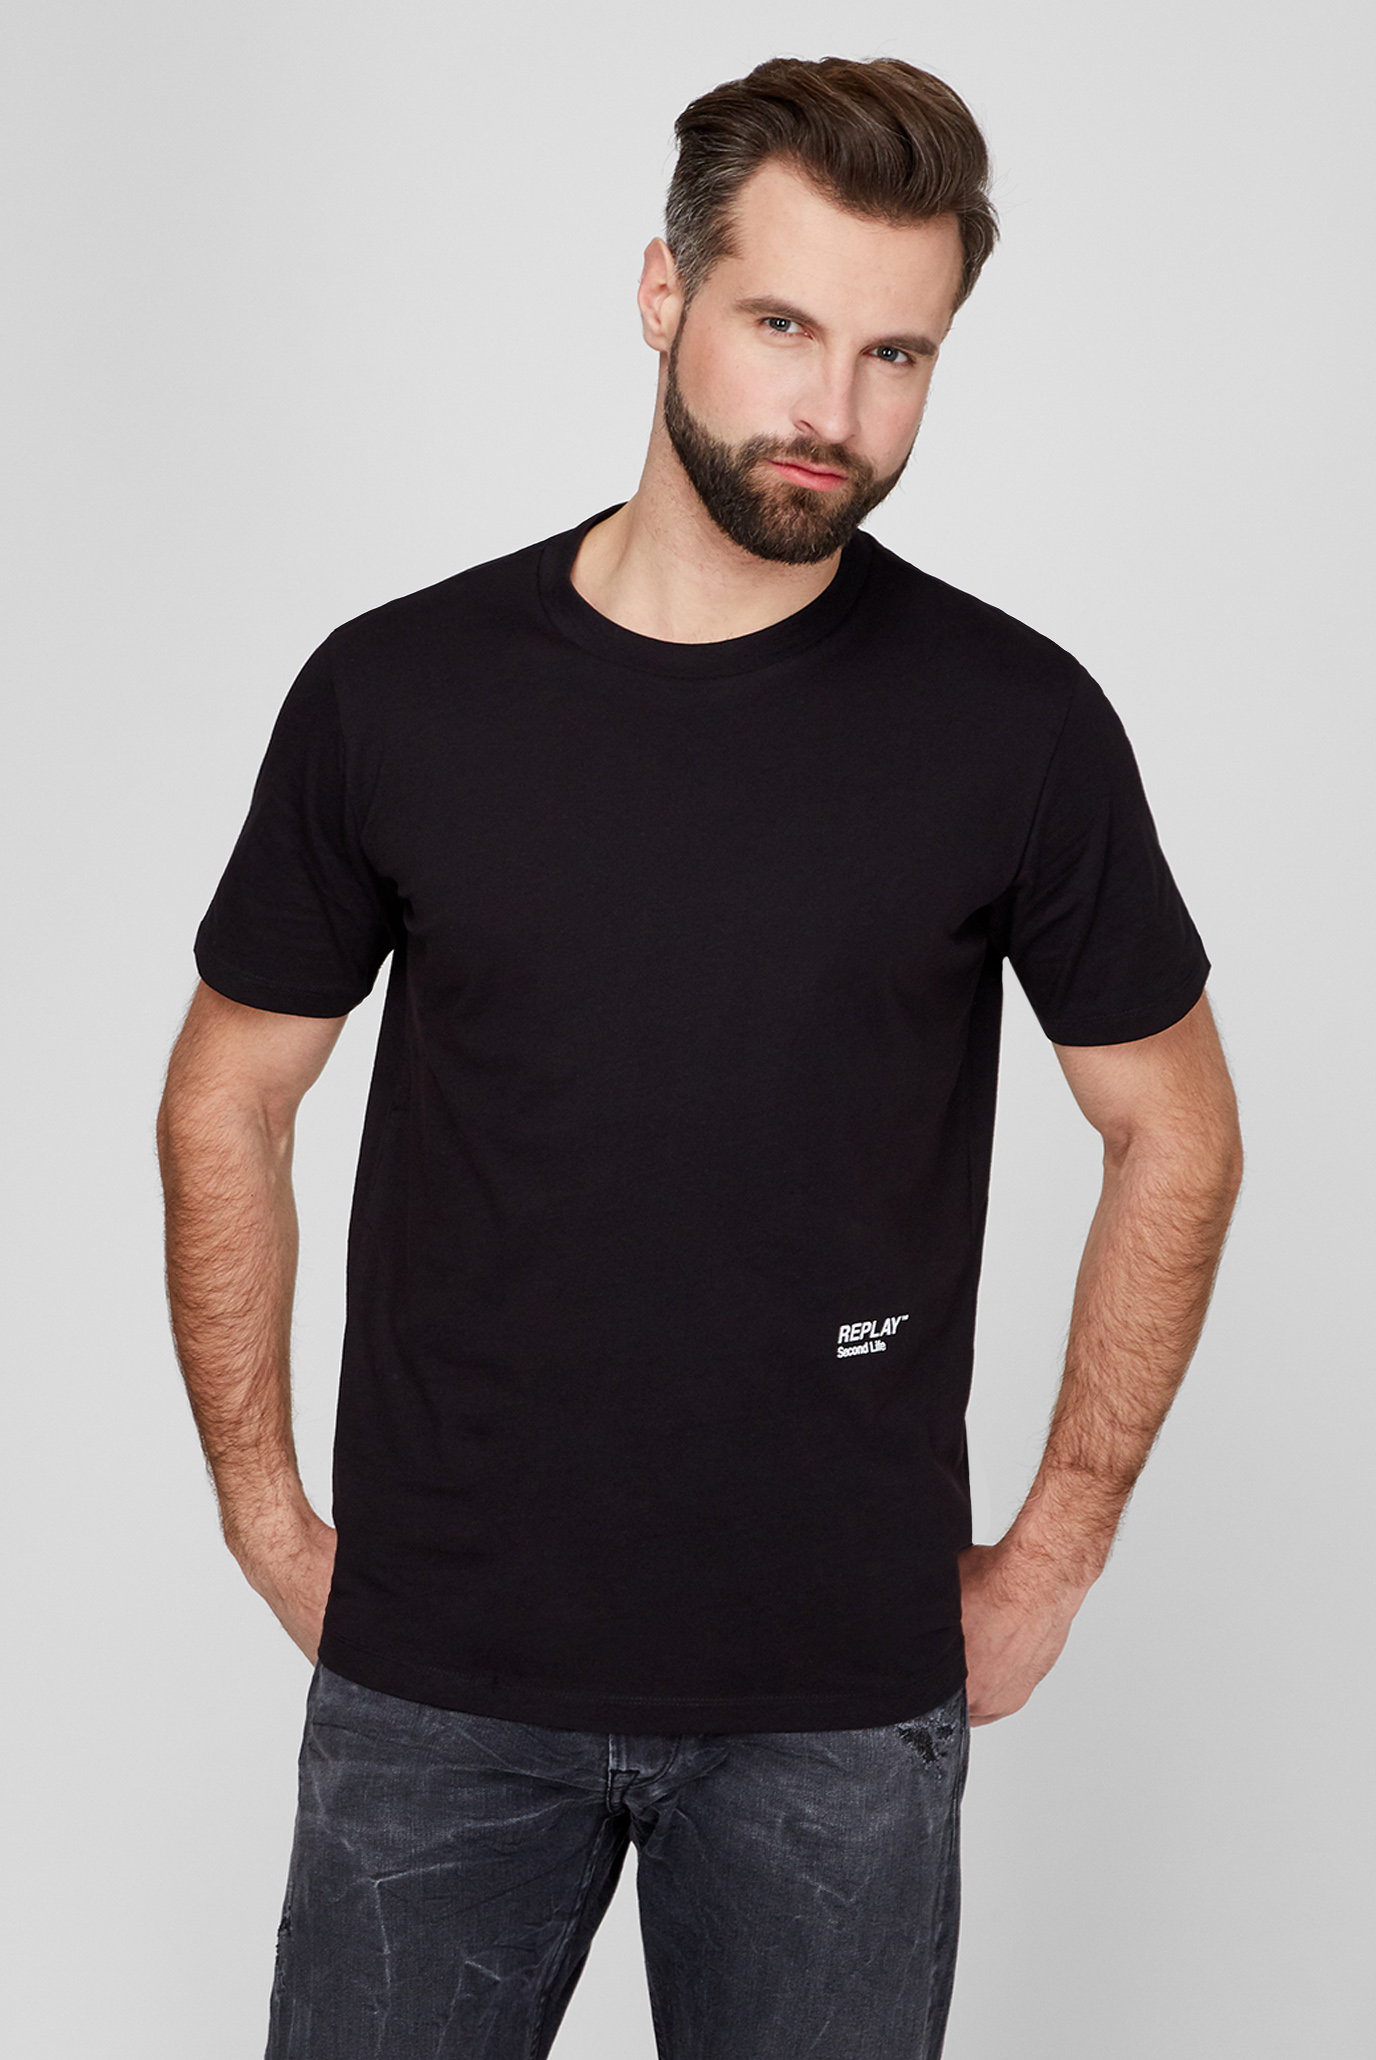 Мужская черная футболка 1